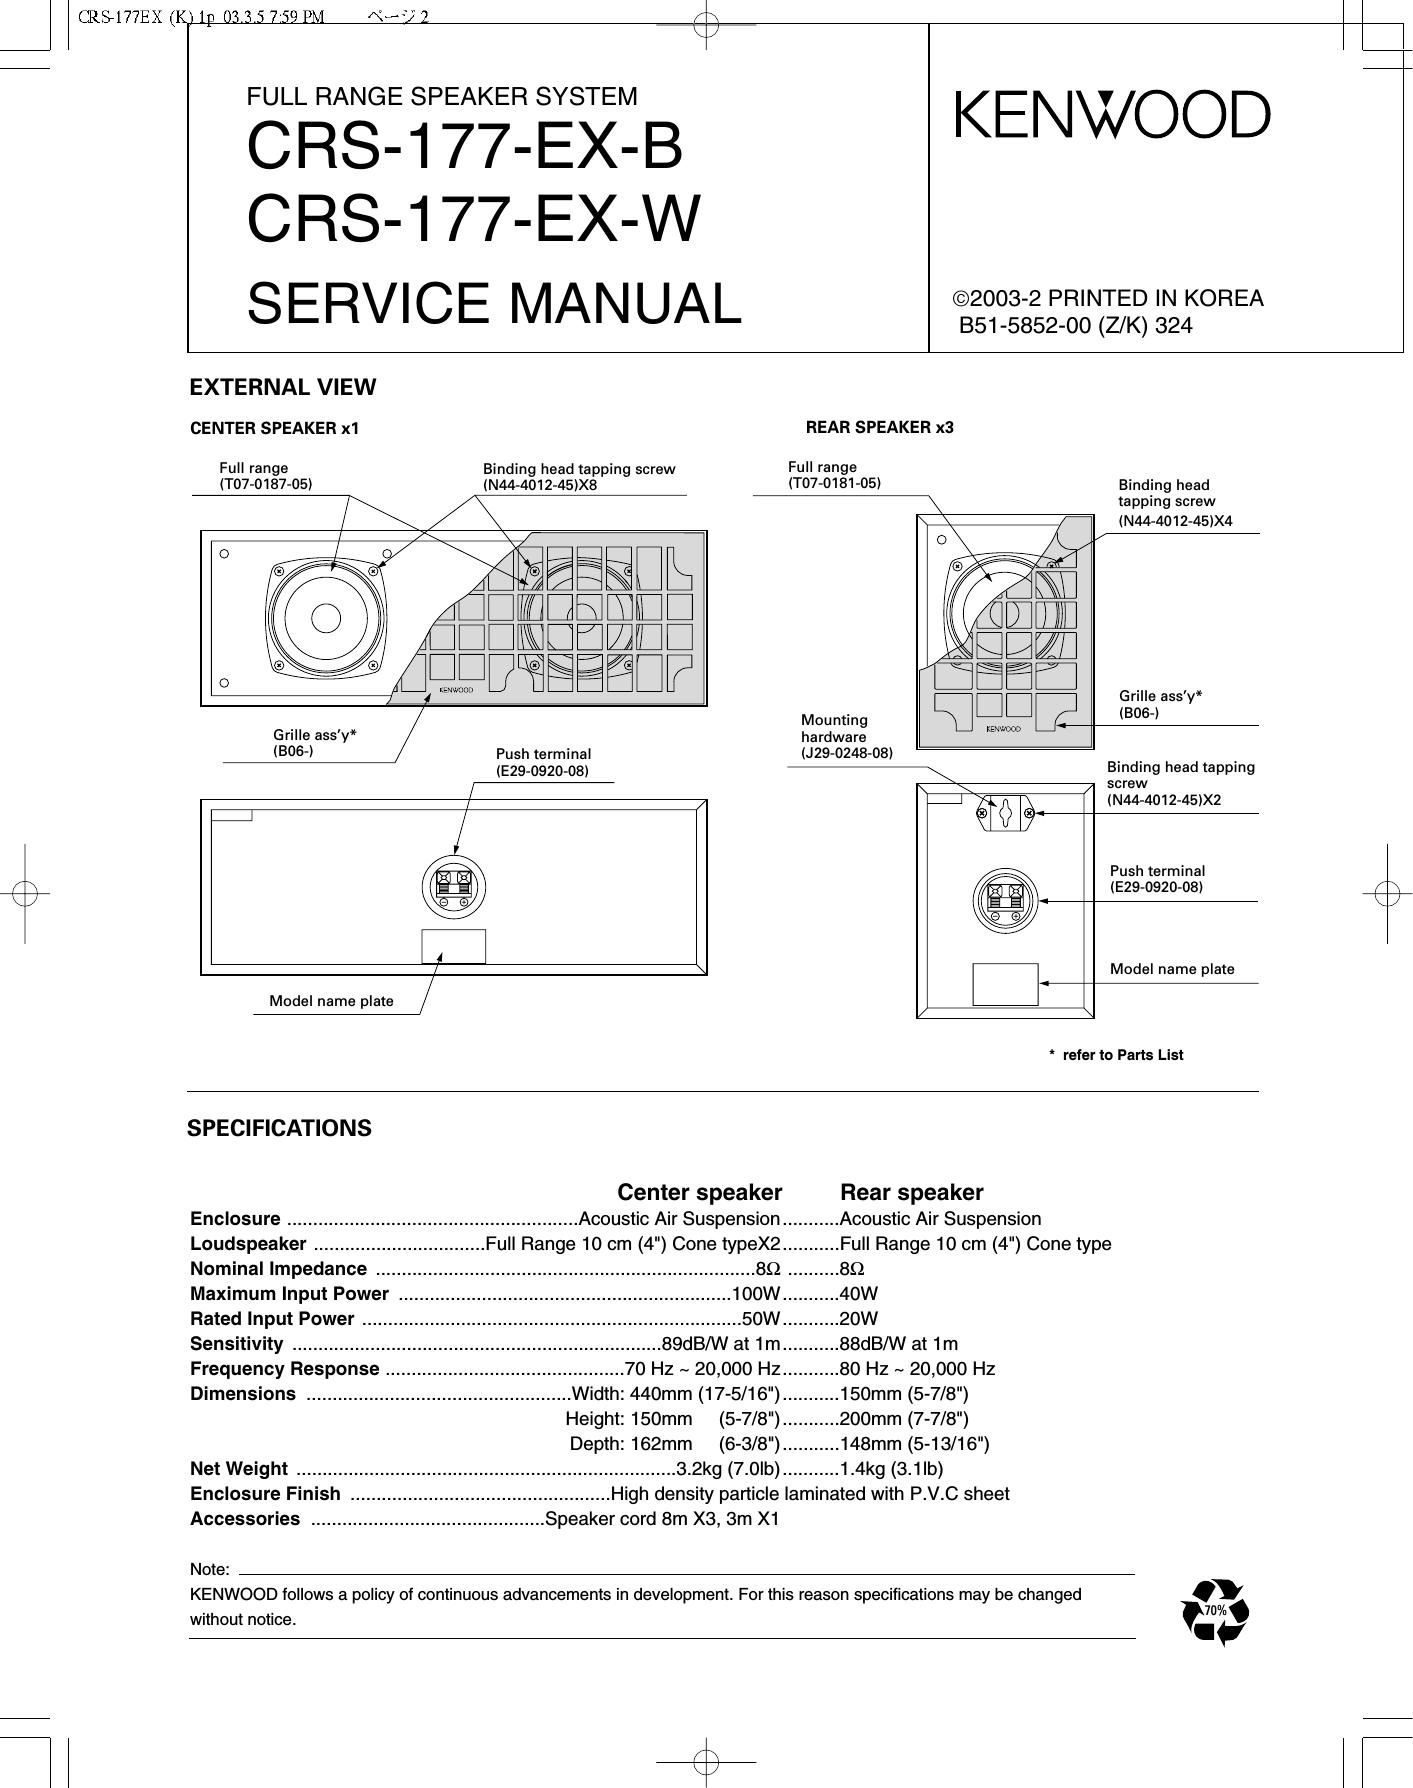 Kenwood CRS 177 EXB Service Manual